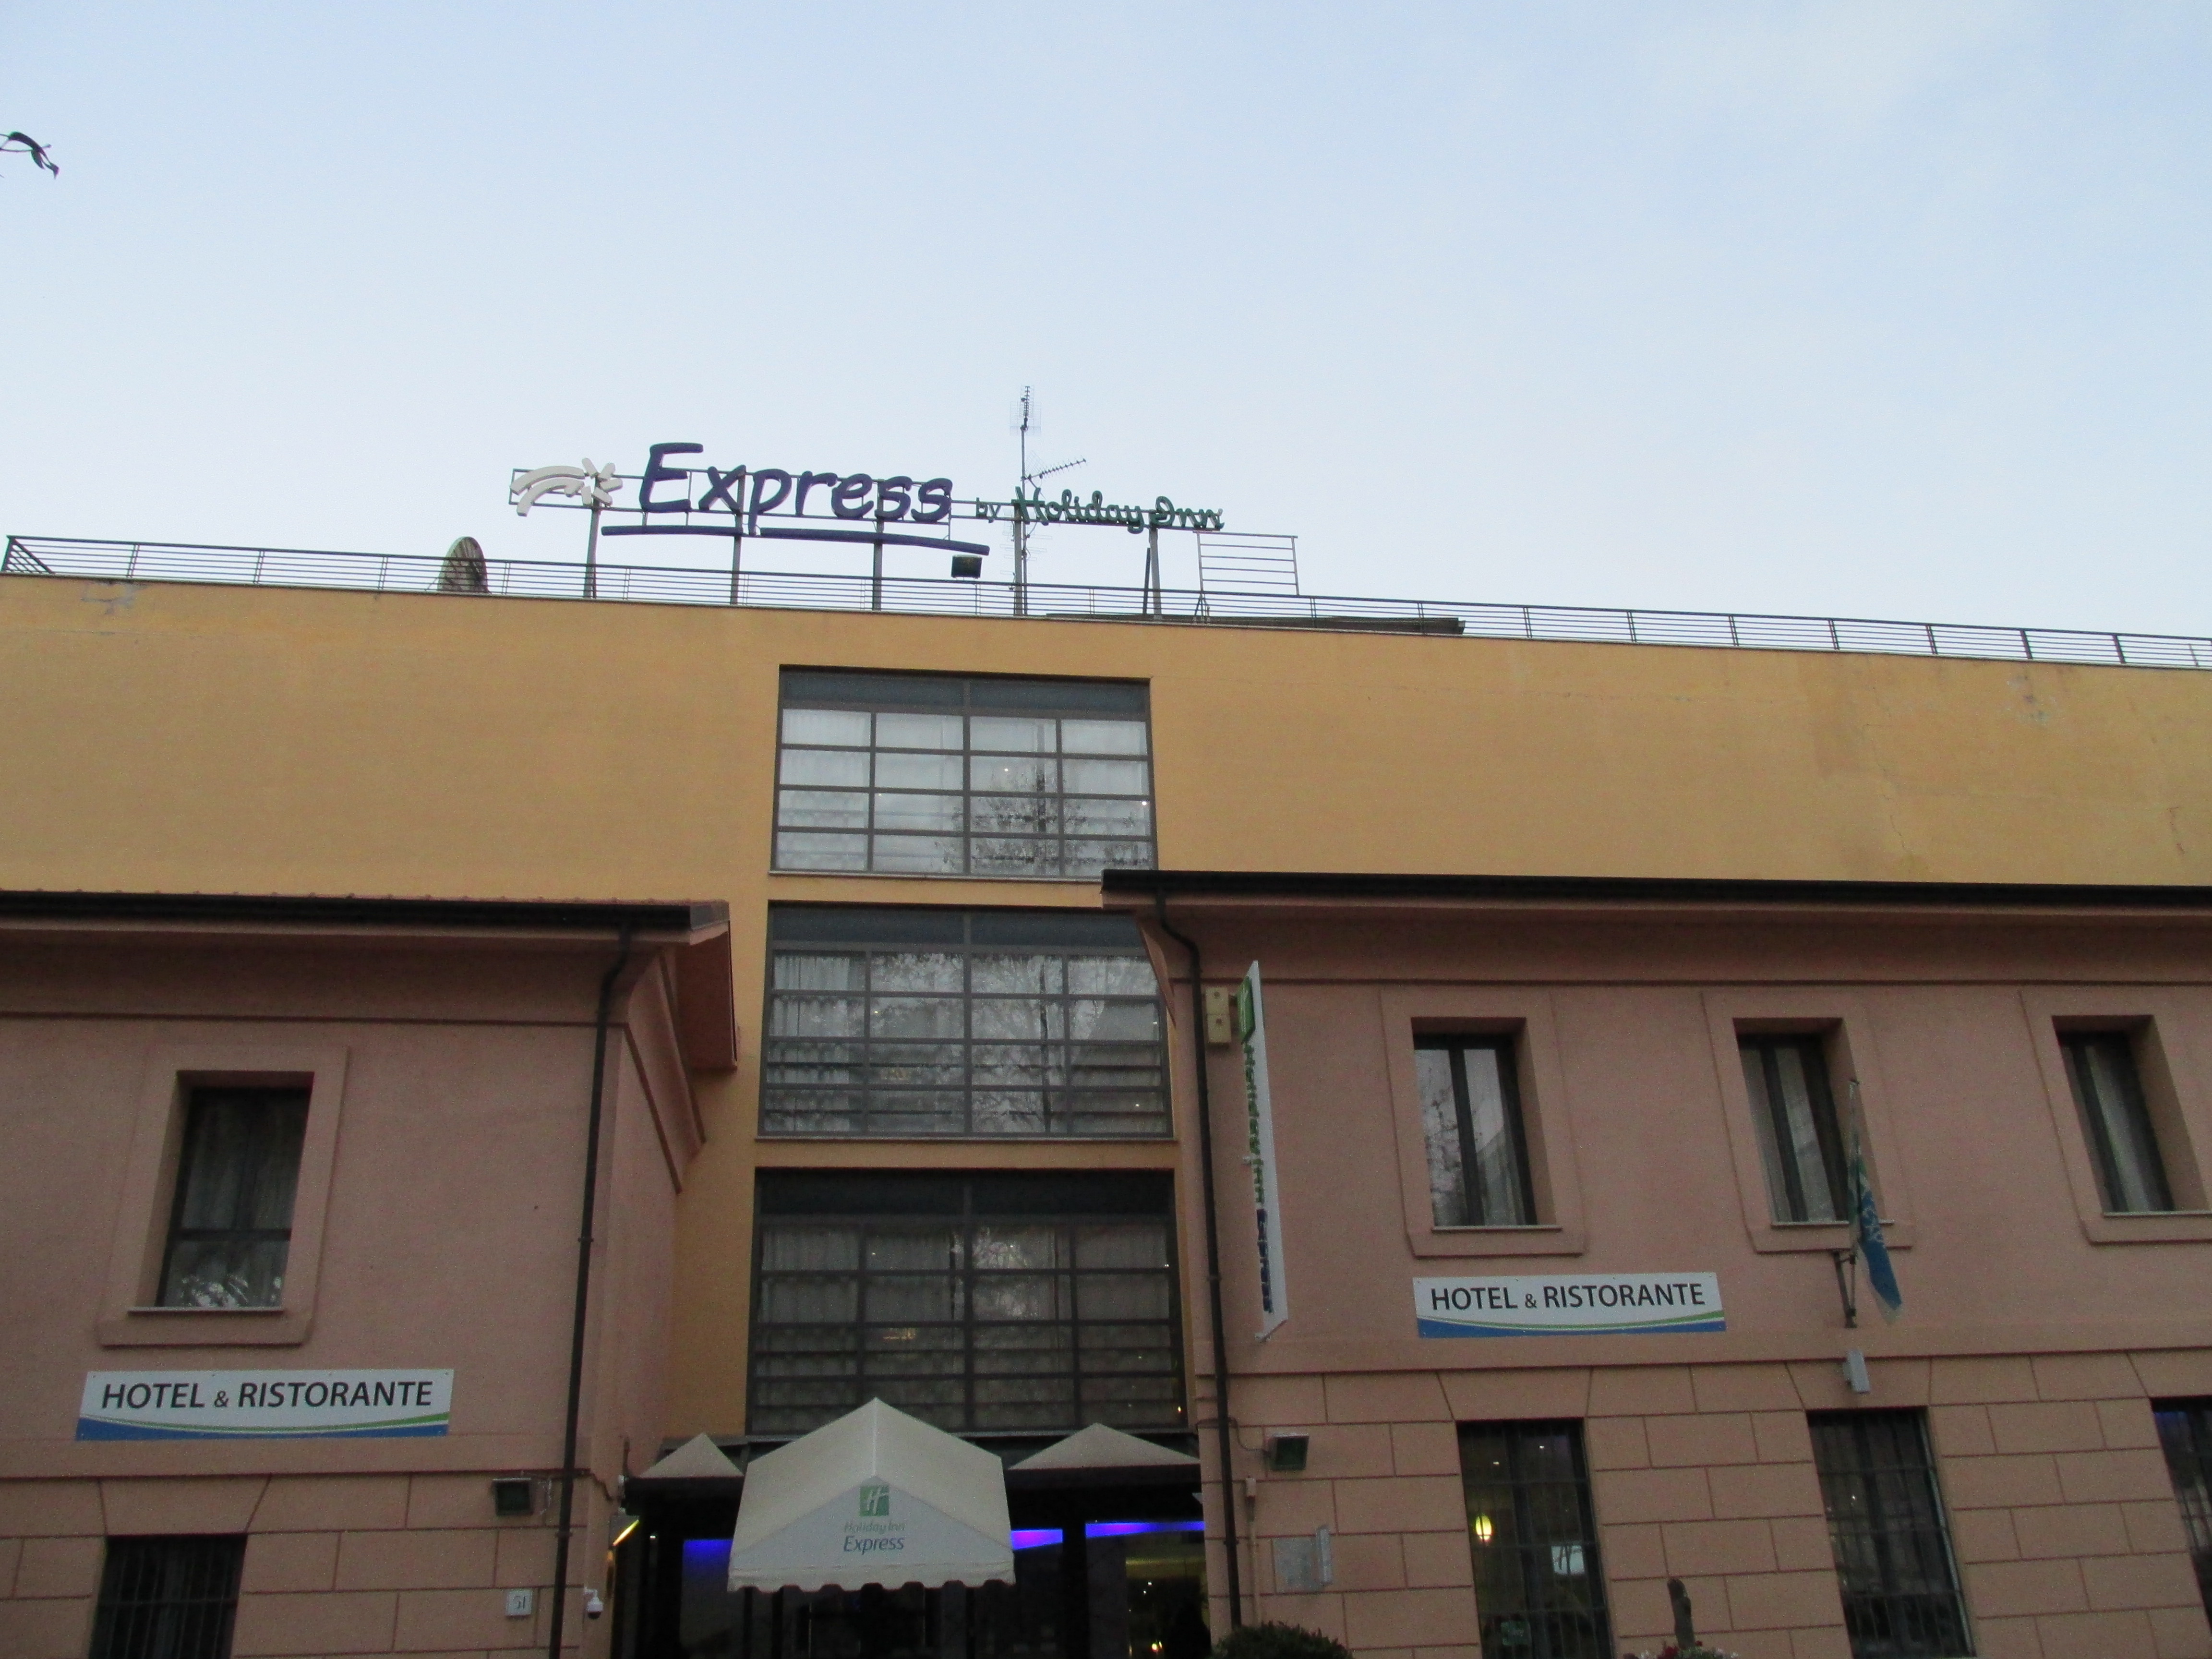 Holiday Inn Express Rome–San Giovanni Photo credit: Michael Ciavardini